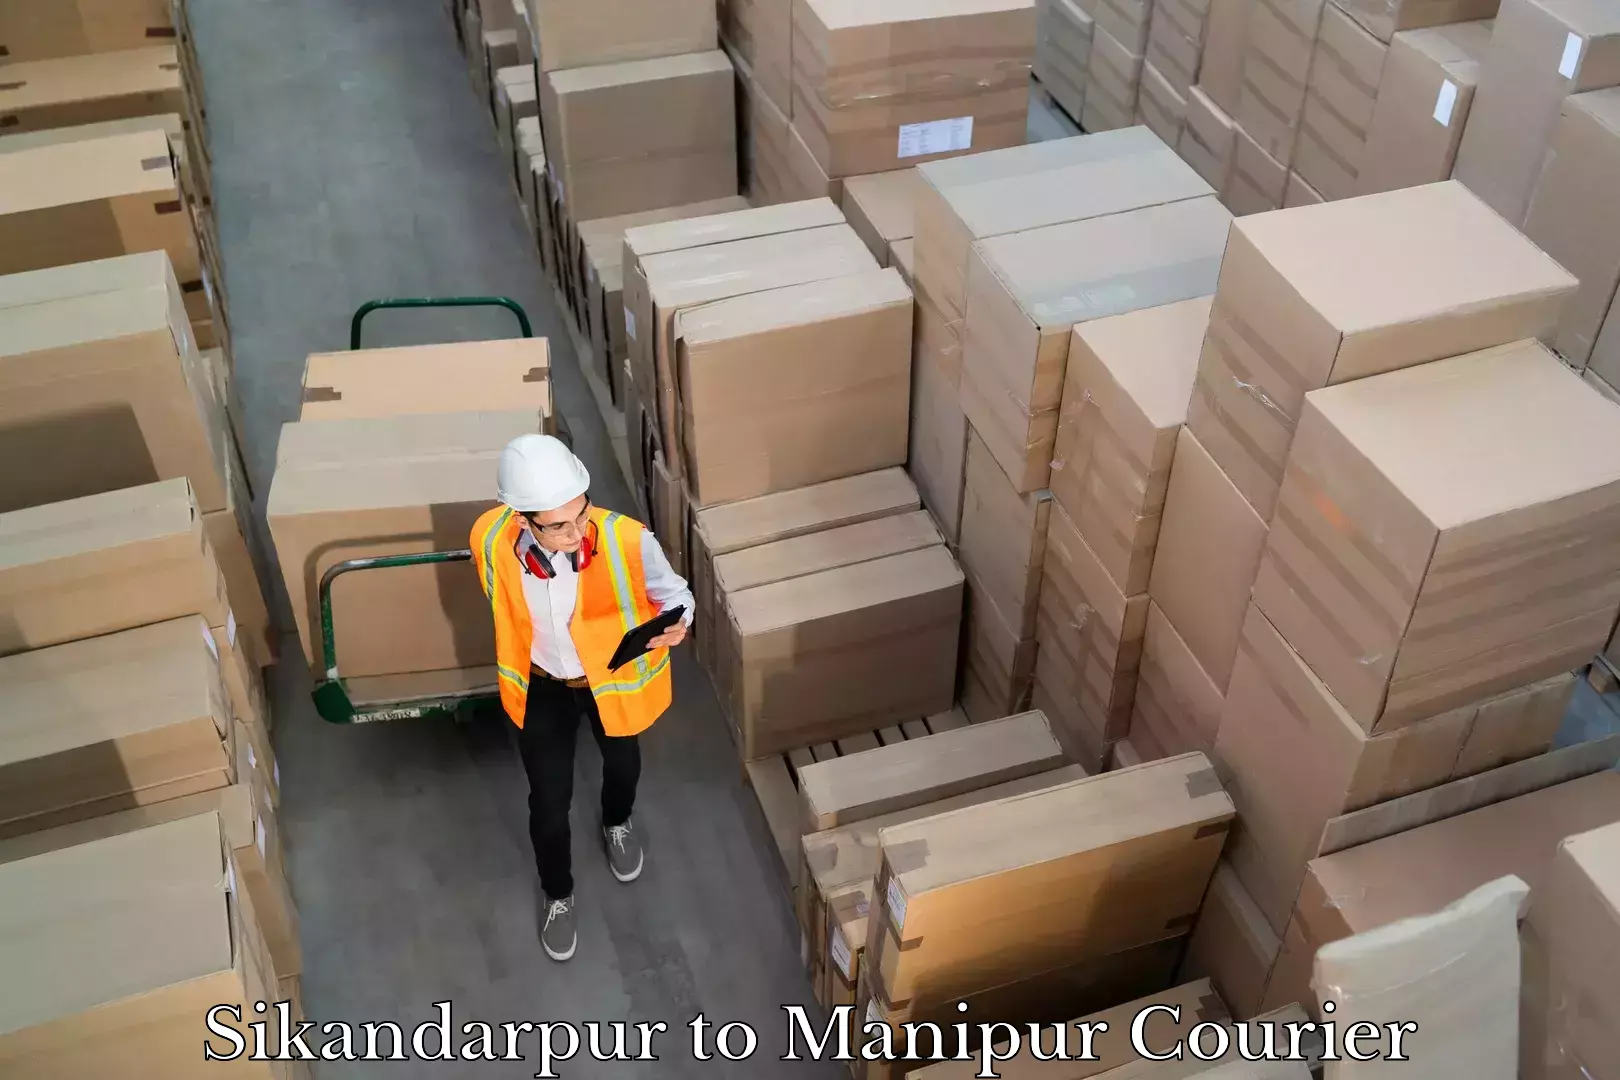 Global logistics network Sikandarpur to Manipur